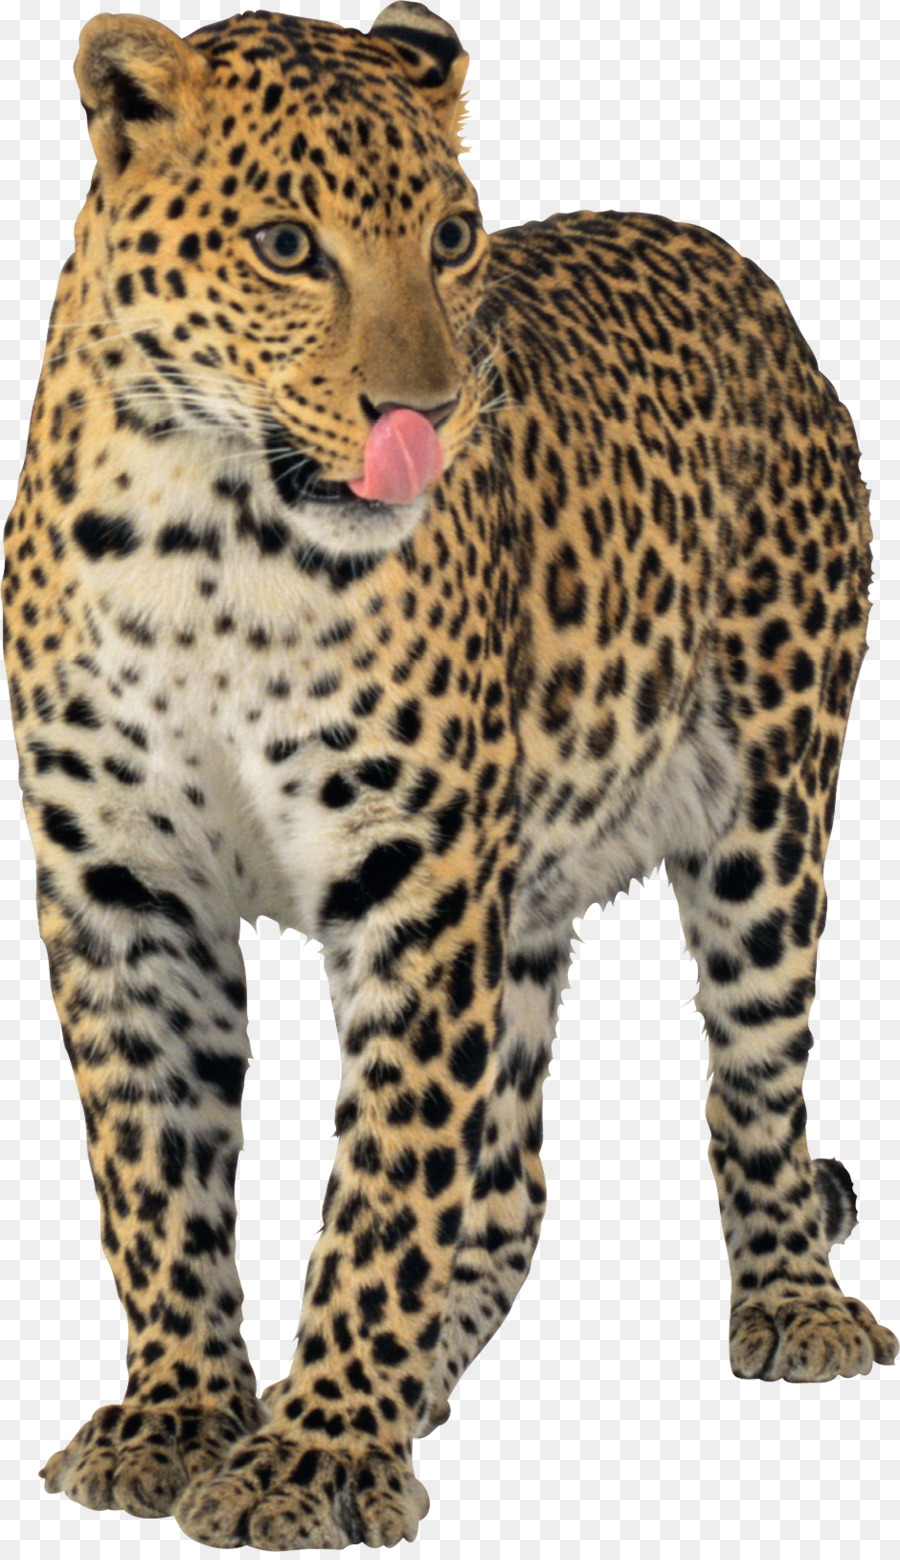 Leopard Jaguar Cheetah - leopard png download - 940*1621 - Free Transparent Leopard png Download.